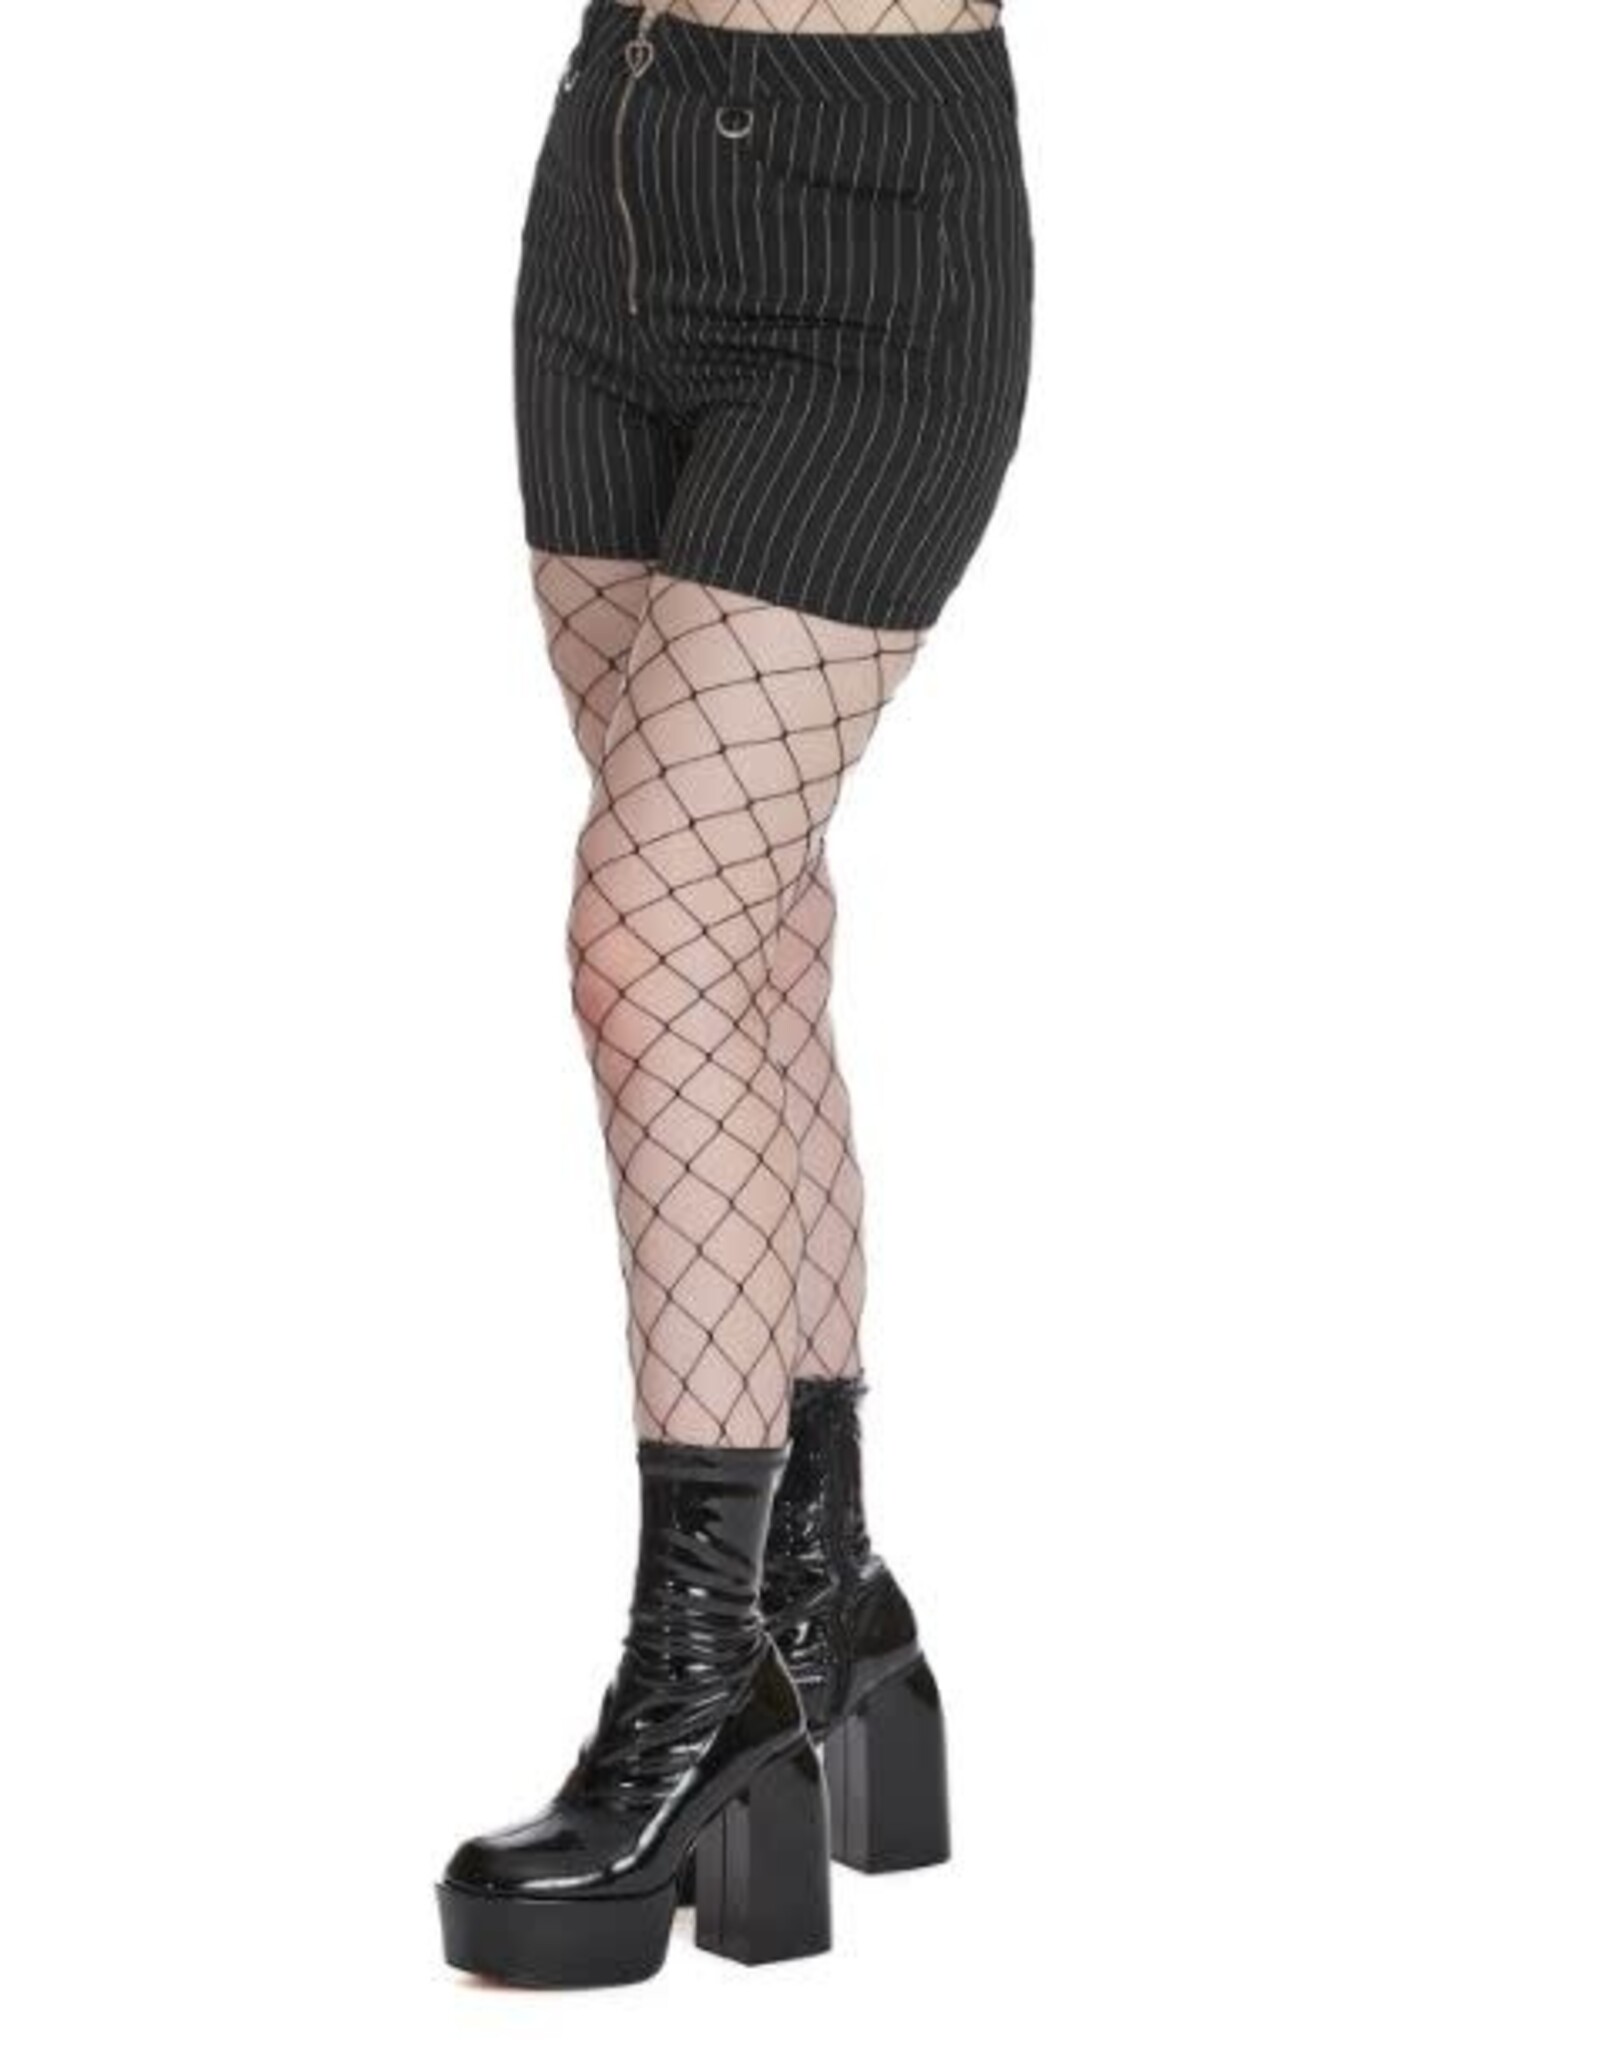 Hina Black Pinstripe Shorts - ST81075